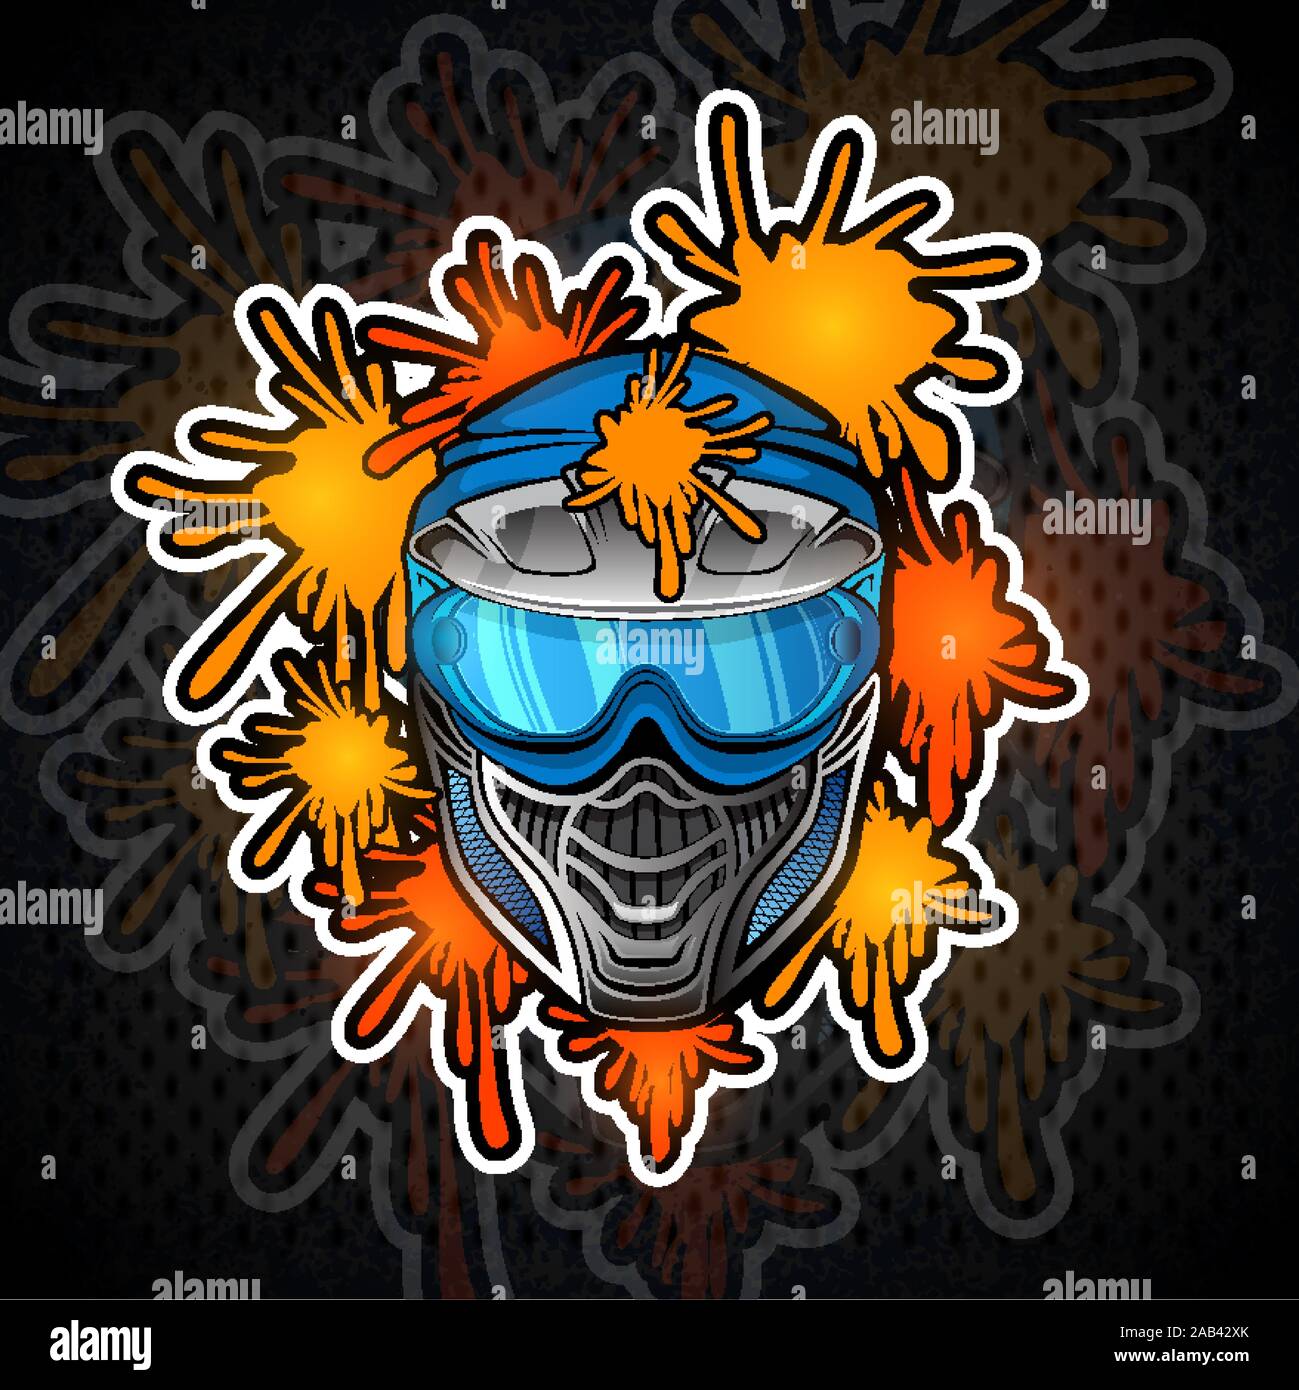 Paintball Emblem-Maske und Farbe kleckse und Spritzer Stock-Vektorgrafik -  Alamy